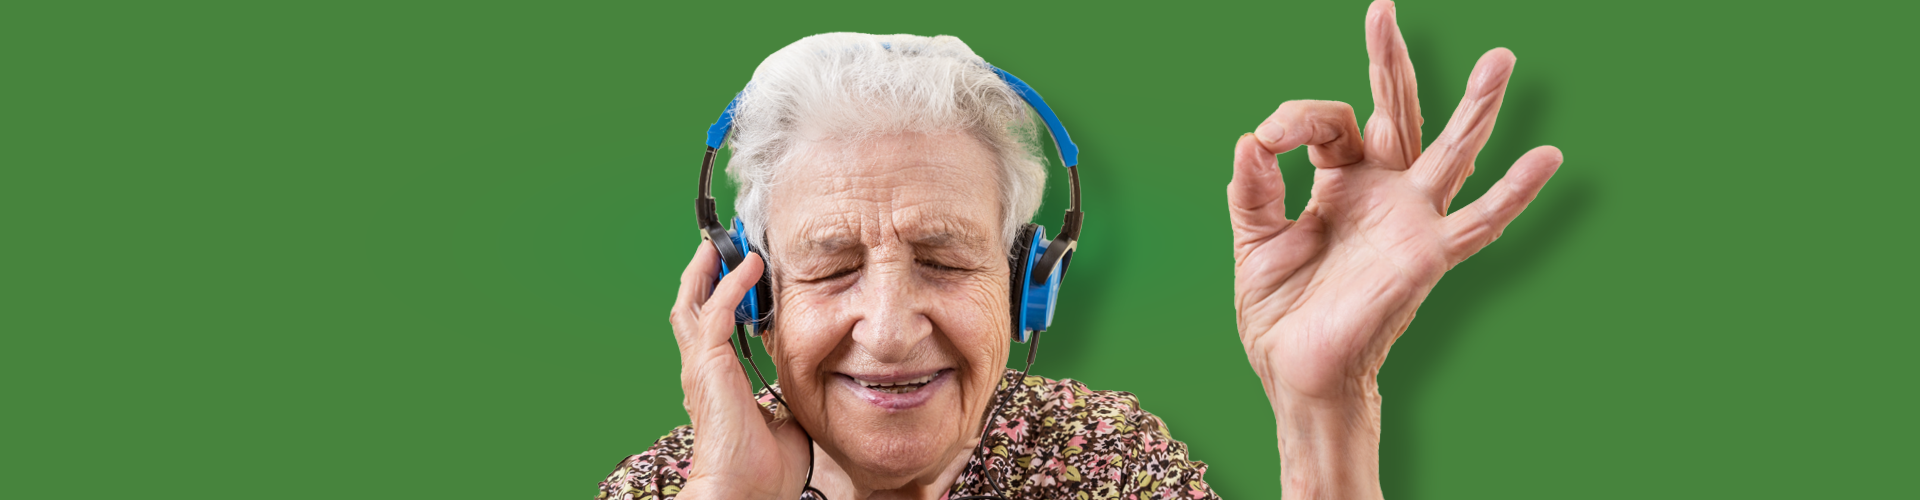 old woman listening to headphones